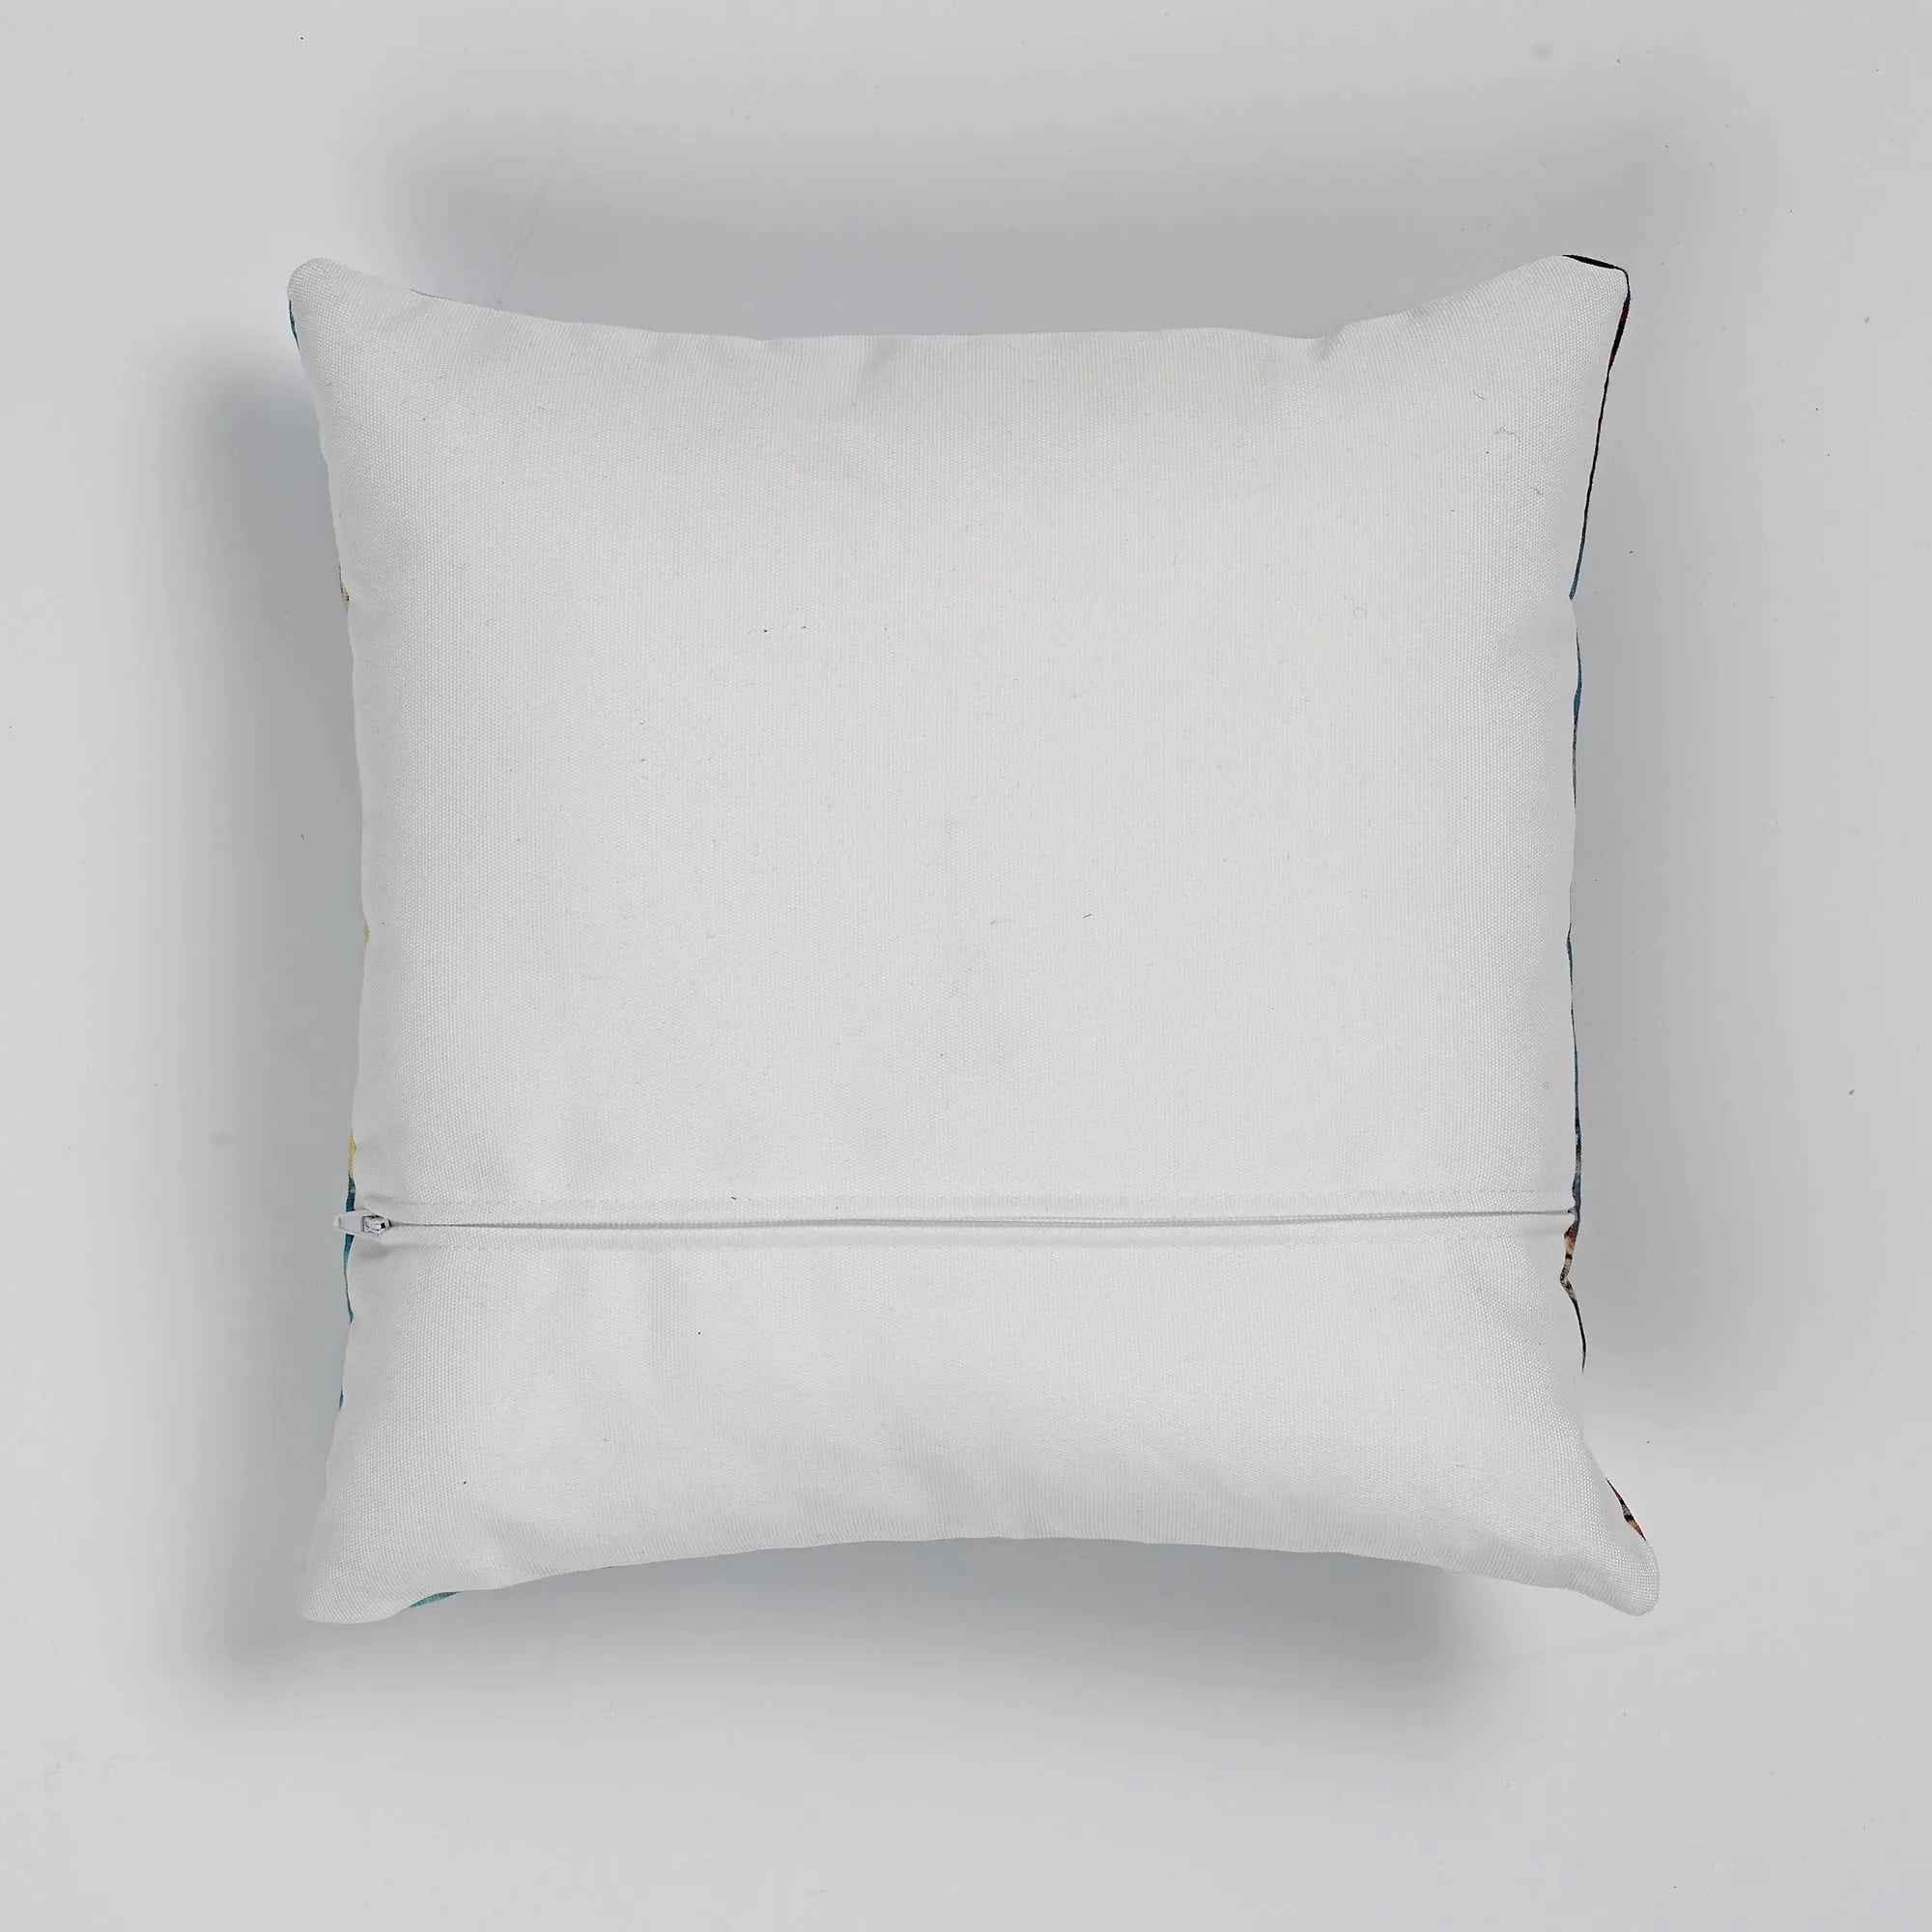 Boomrijk Landscape Cushion - Decorative Throw Pillow - Georges De Feure - Throw Pillows - Aesthetic Art